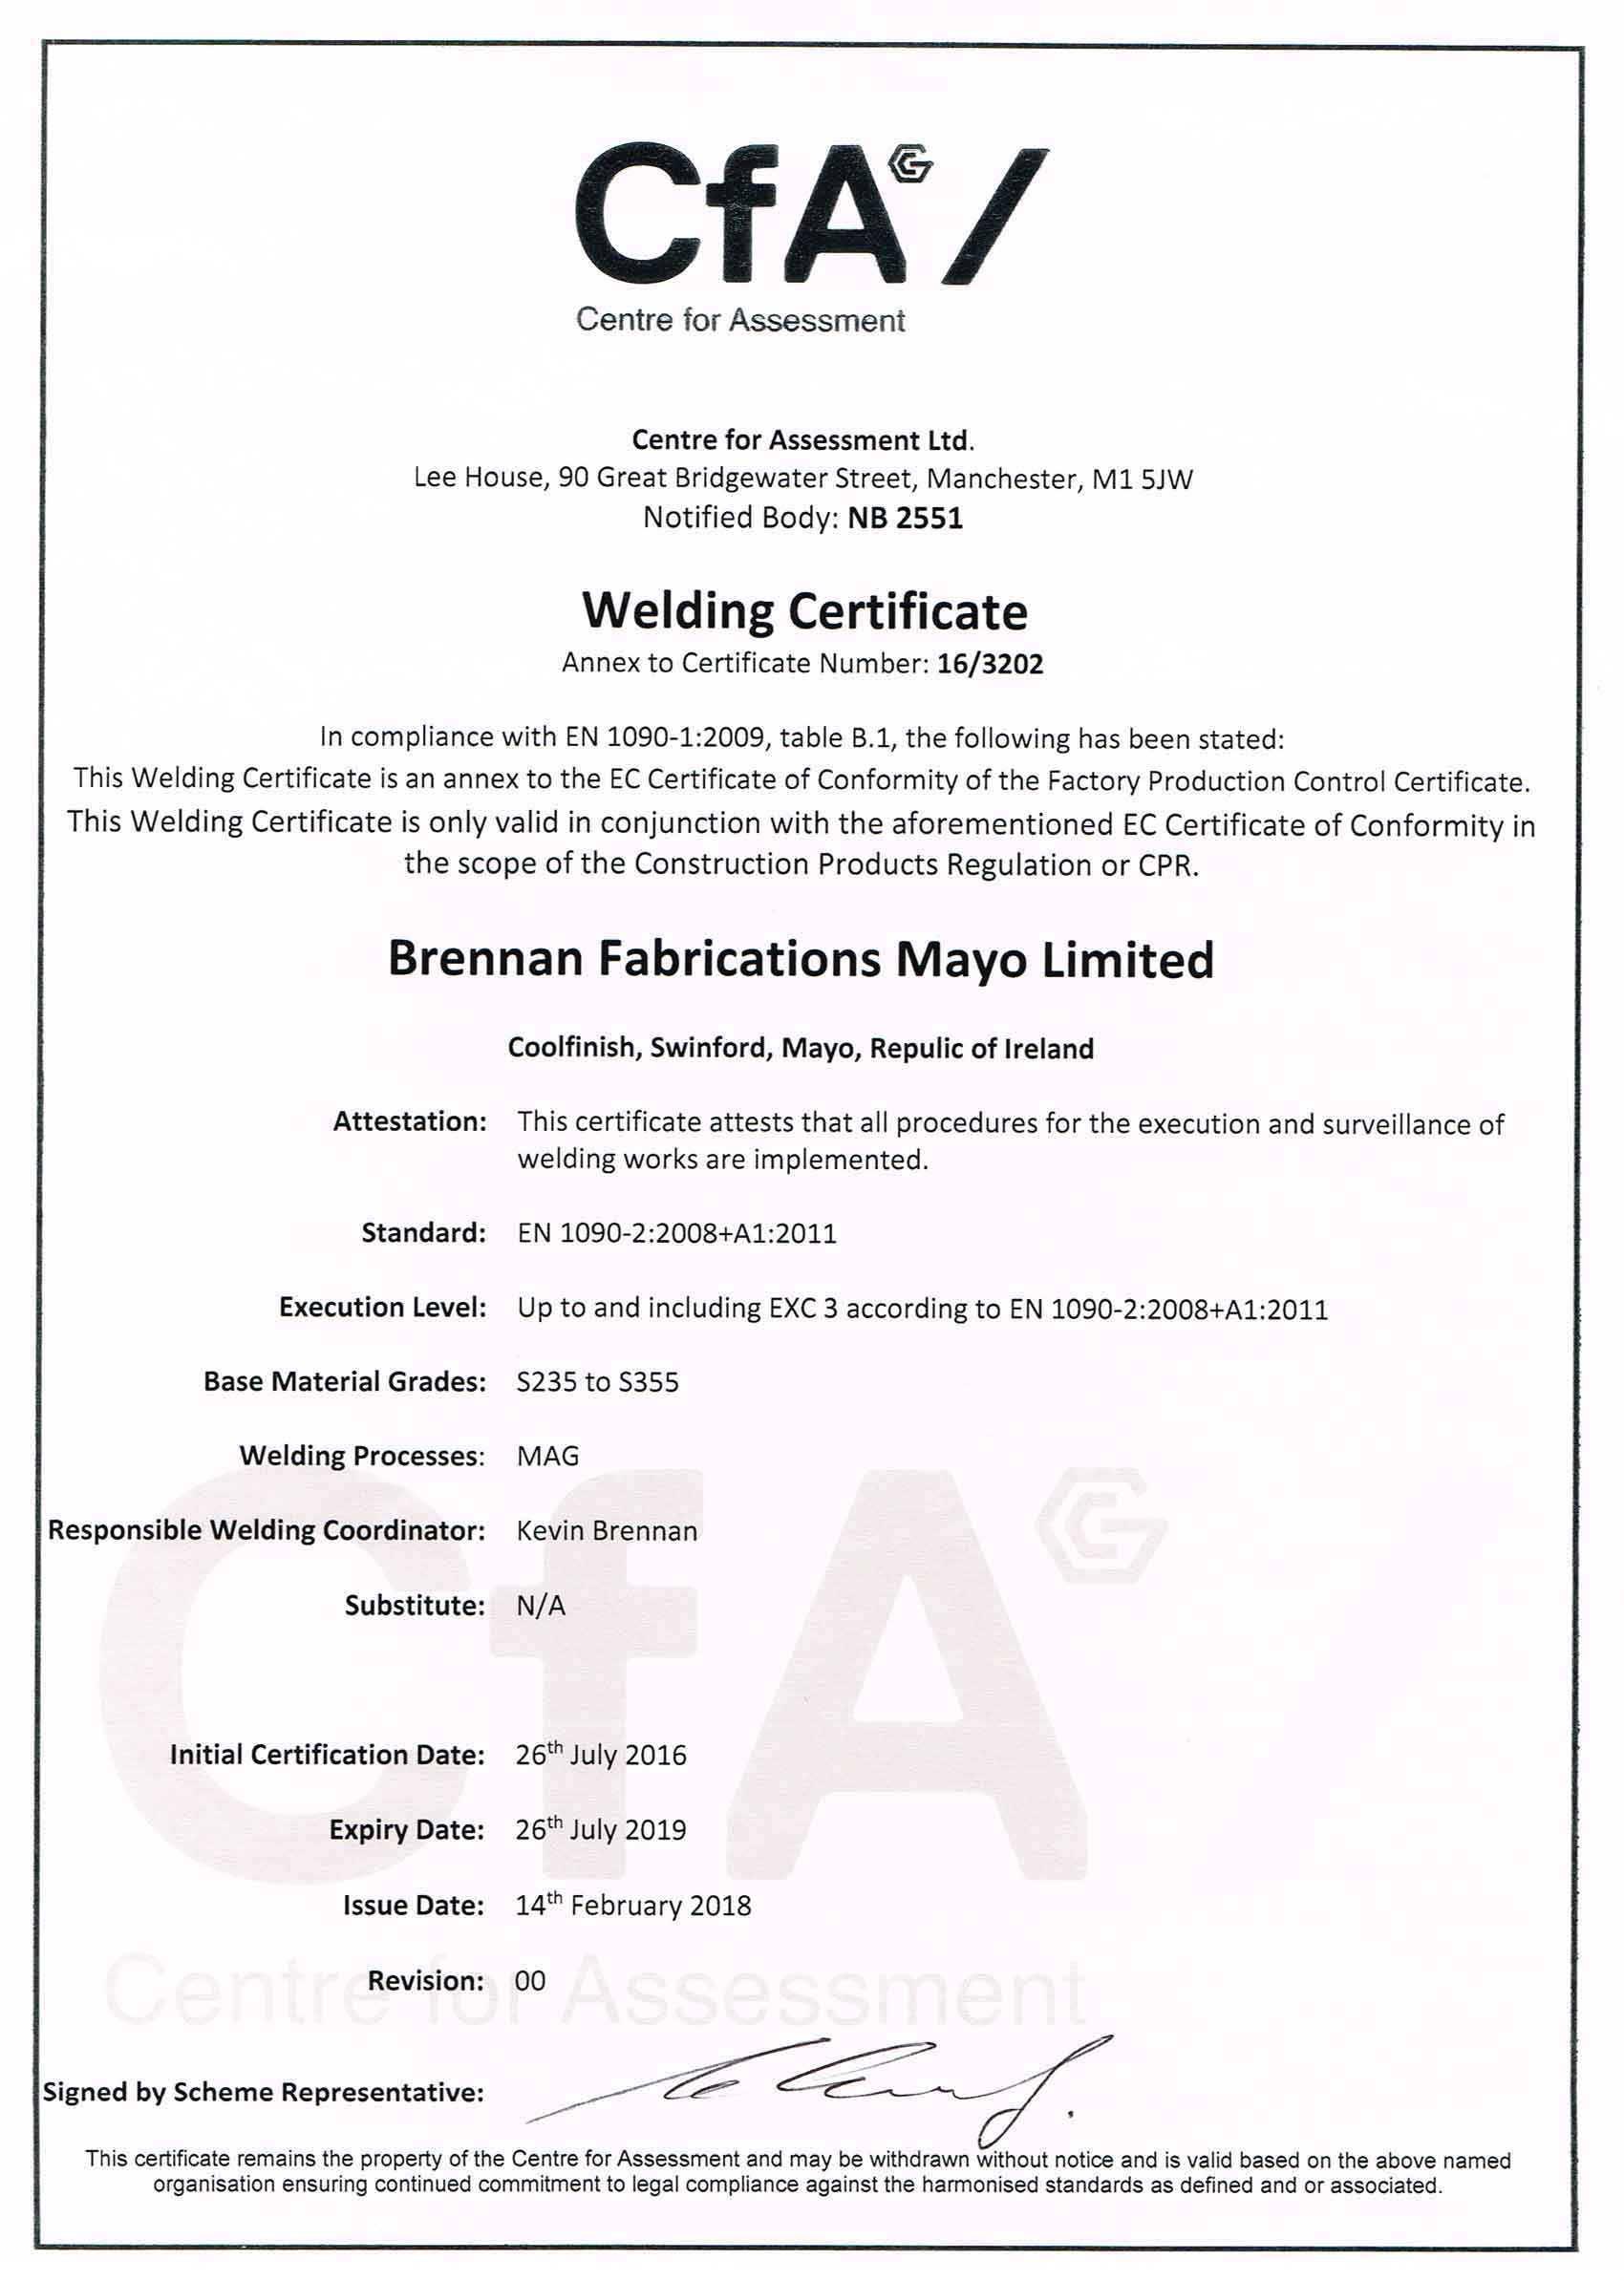 Brennan-Fabrications-Mayo-Welding-Certification-annex-to-EN1090-cert